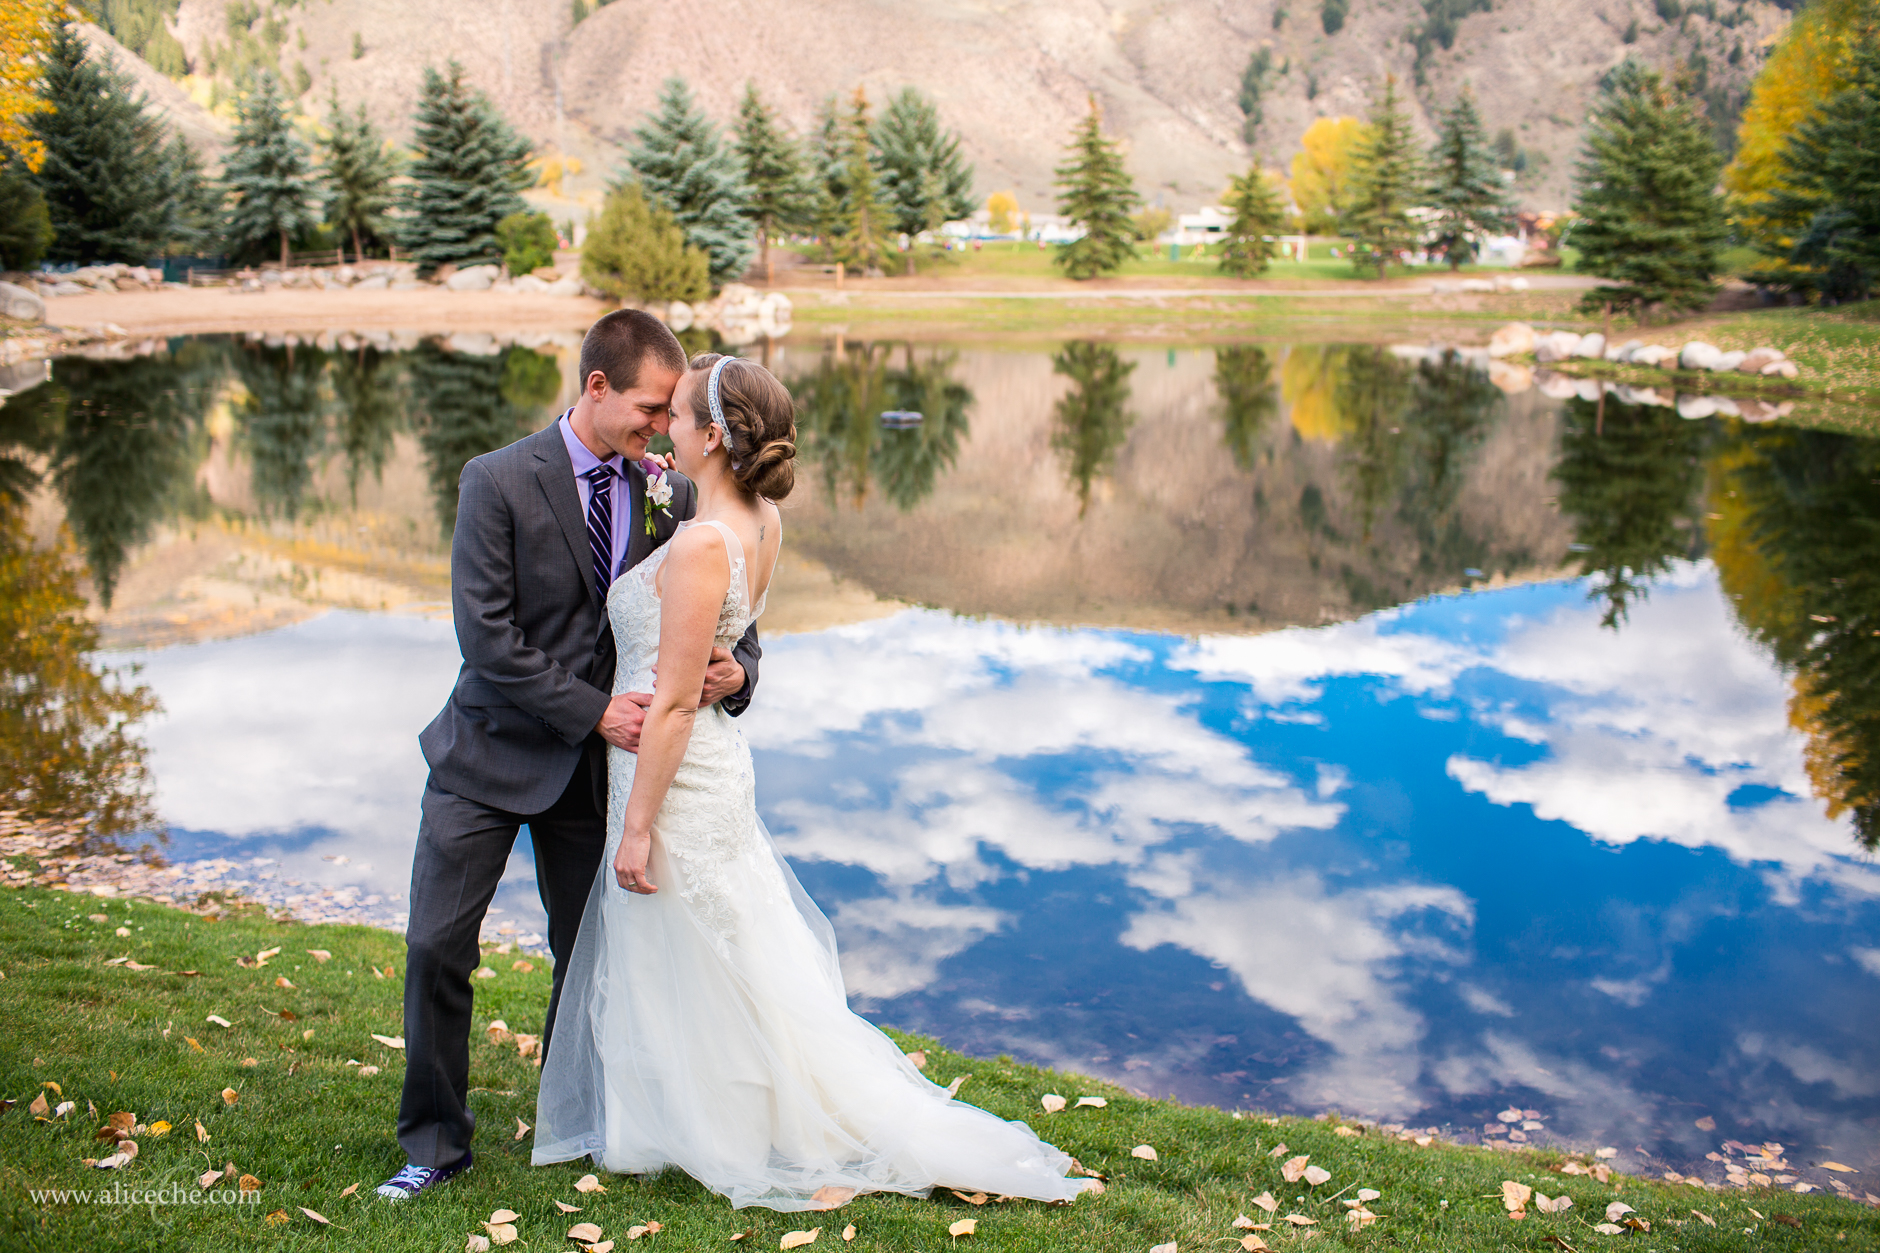 alice-che-photography-wedding-reflections-happy-couple